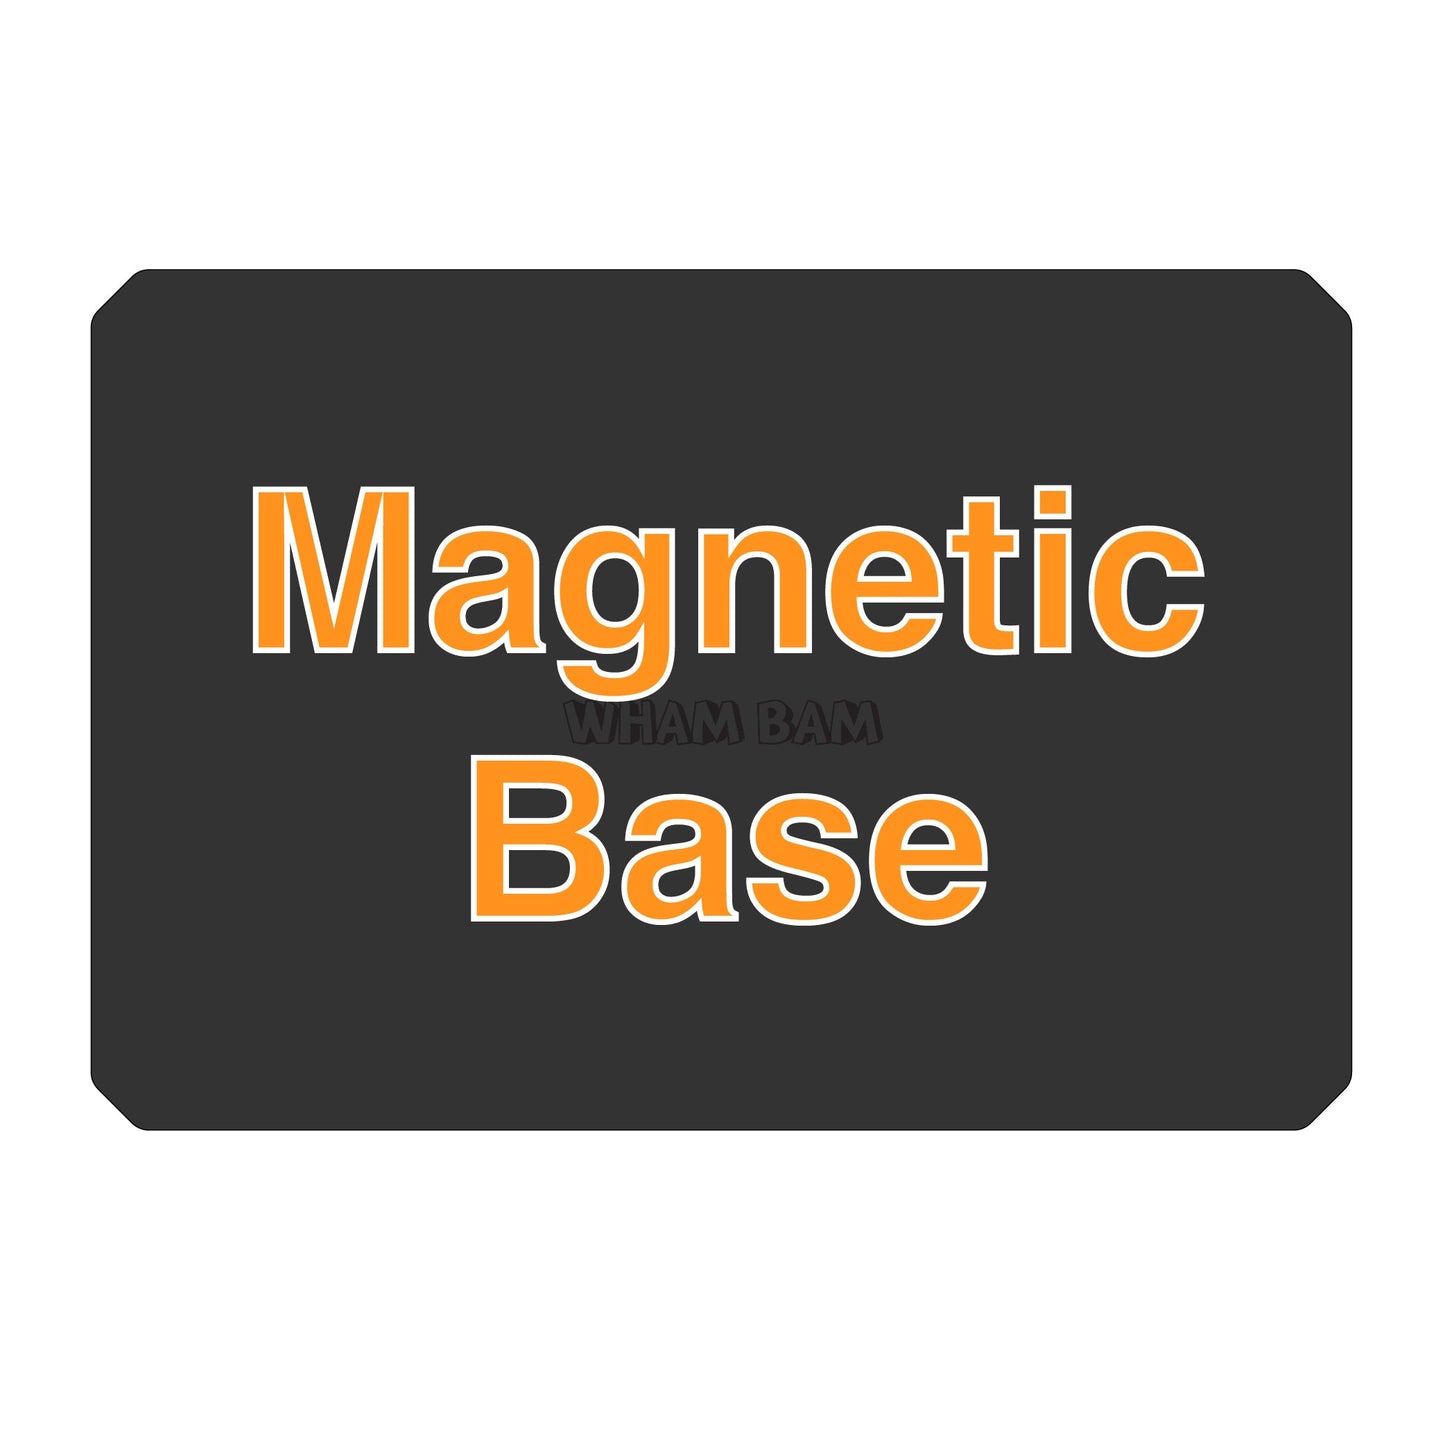 Magnetic Base - 315 x 215 - E3D  ToolChanger